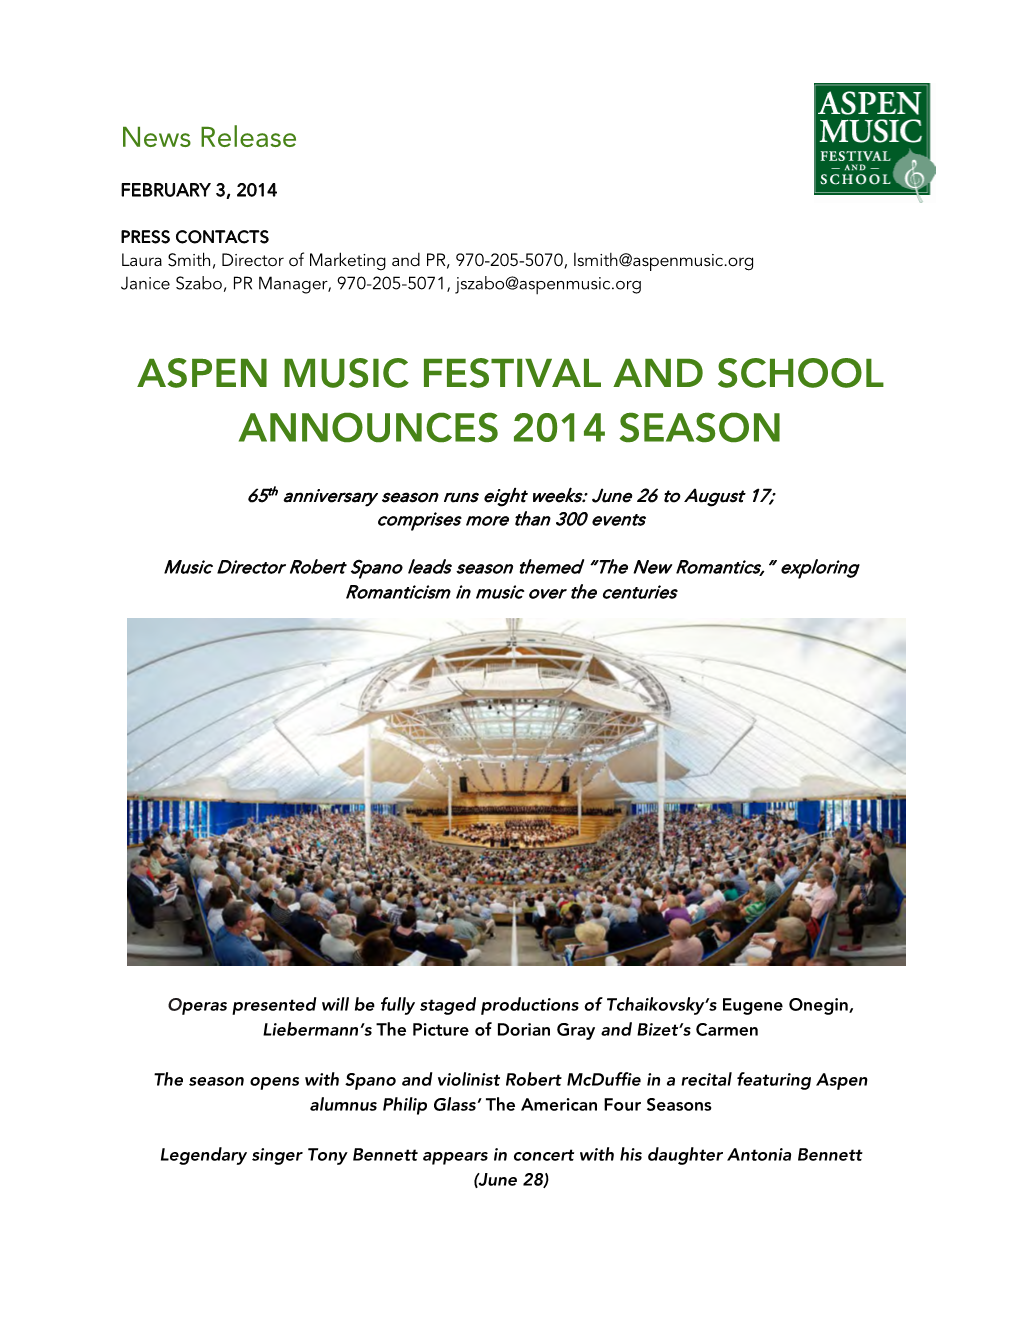 Aspen Music Festival and School Announces 2014 Season